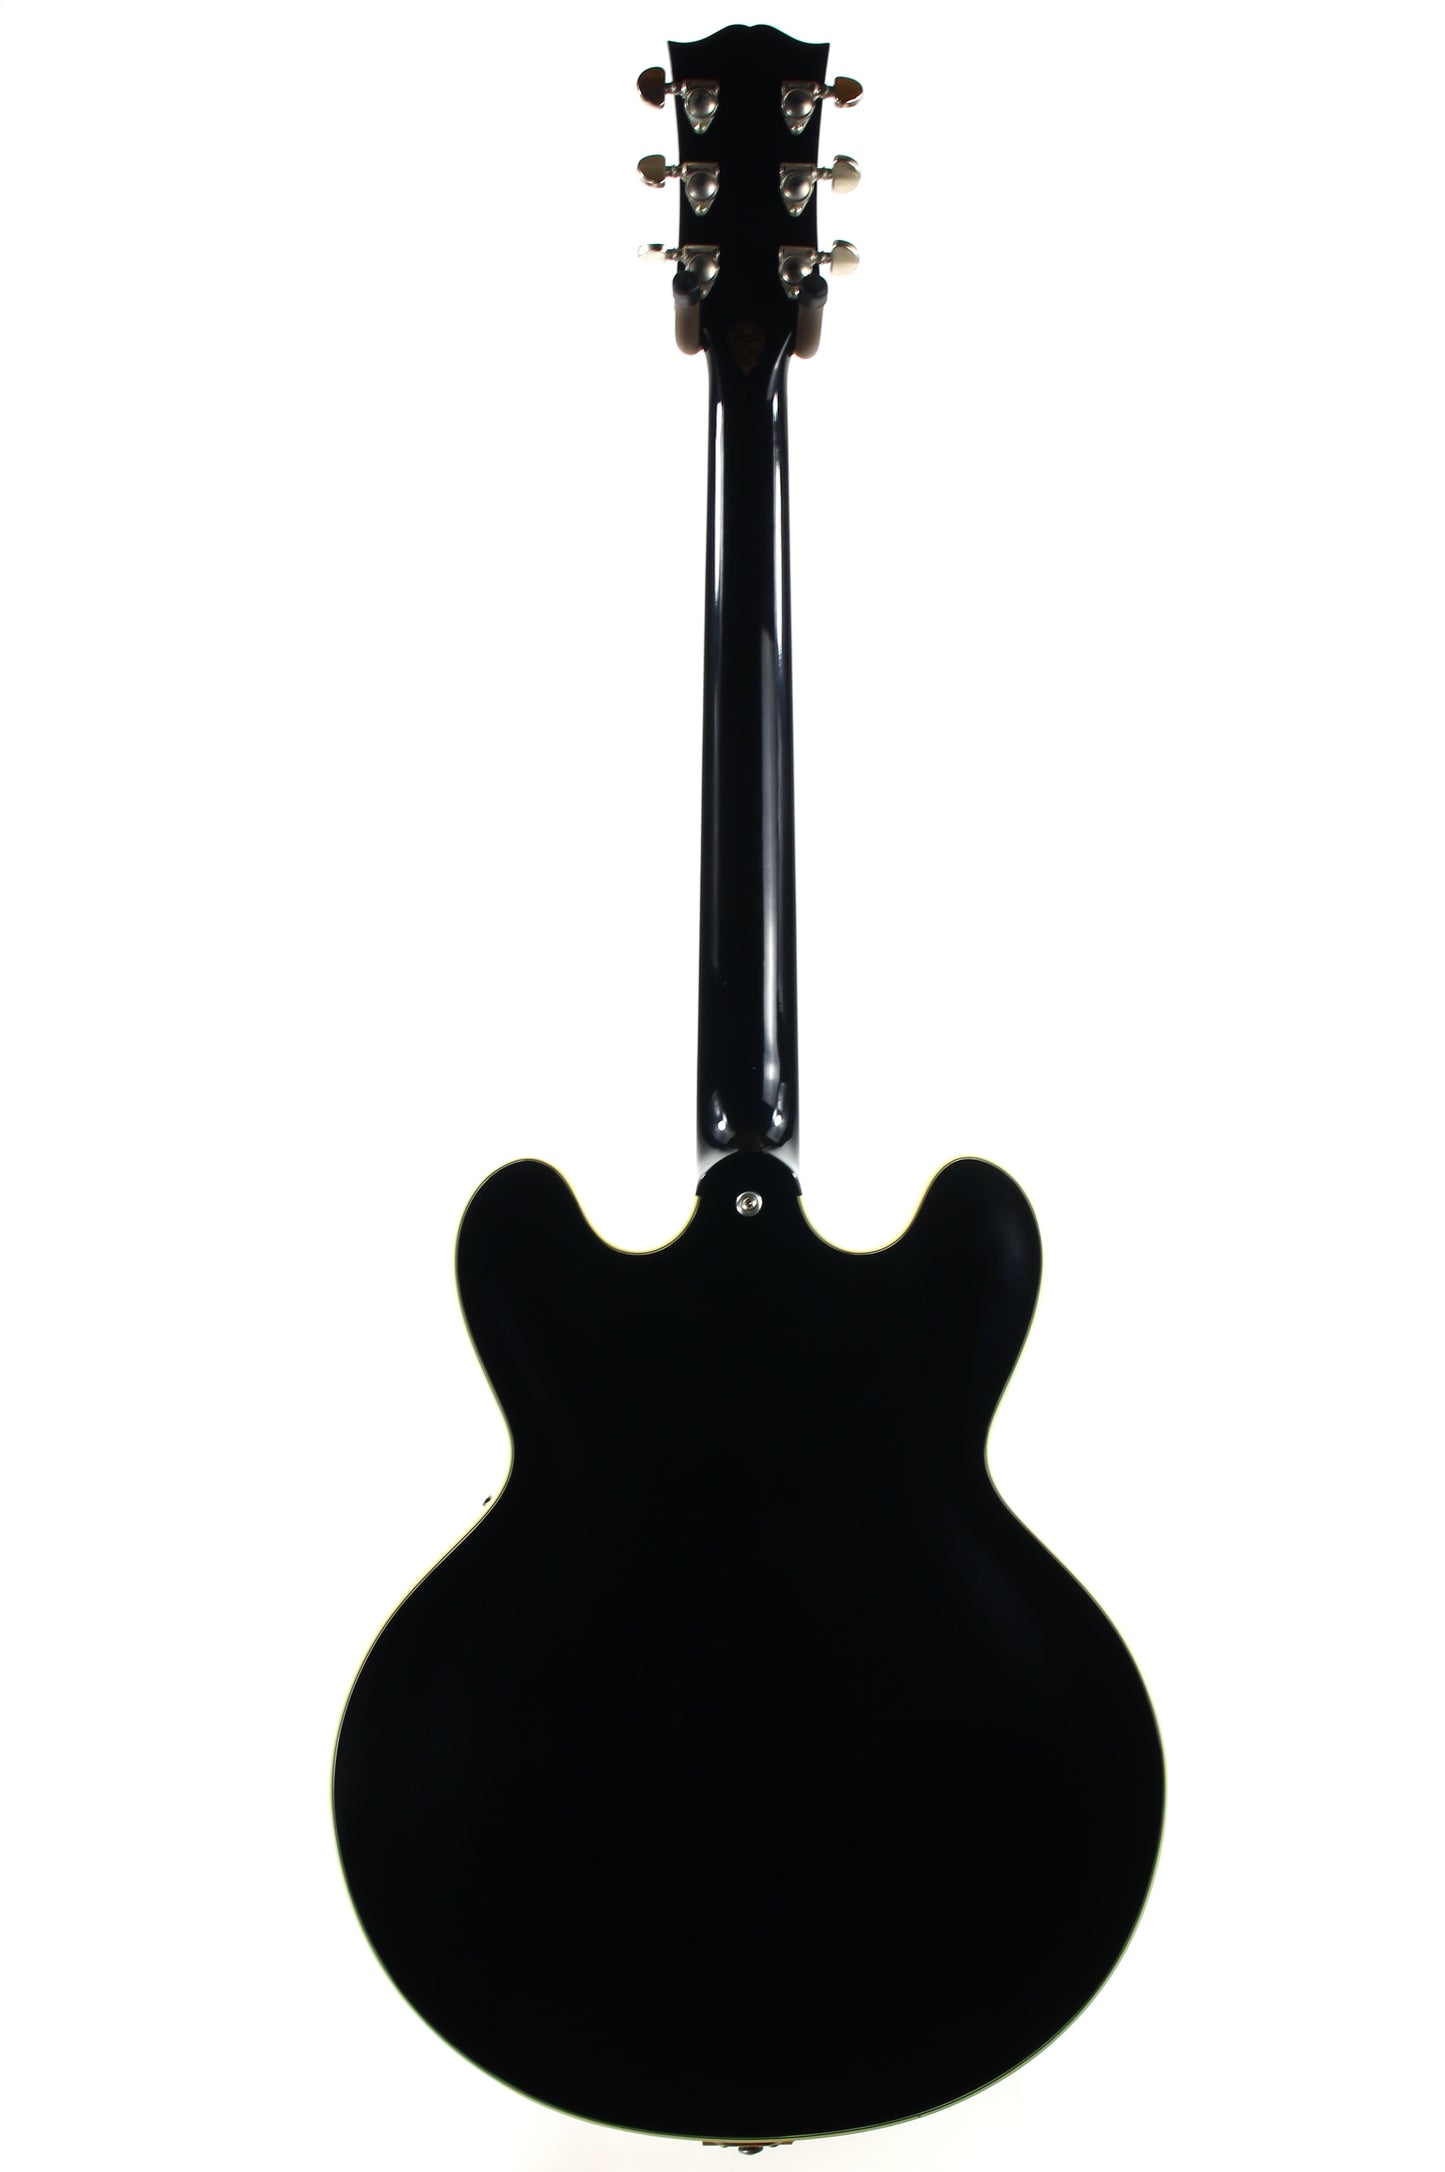 PROTOTYPE! 2017 Gibson Memphis Artist Proto Shinichi Ubukata Ebony Black ES-355 - Trini Lopez Diamond F-Holes DG-335, Bigsby